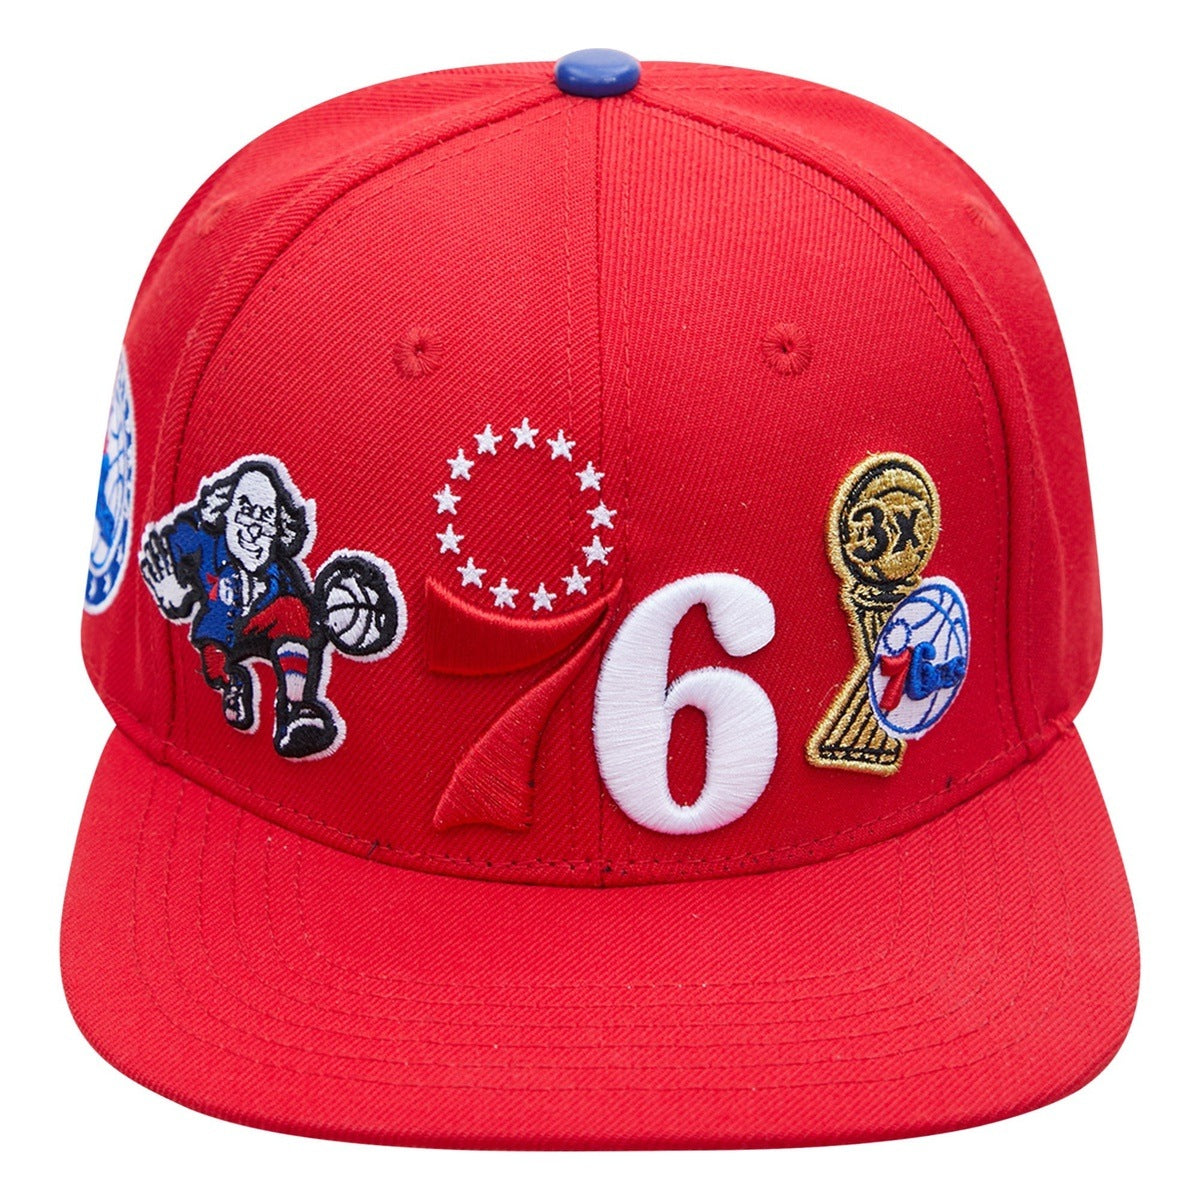 NBA PHILADELPHIA 76ERS CITY DOUBLE FRONT LOGO UNISEX SNAPBACK HAT (RED)